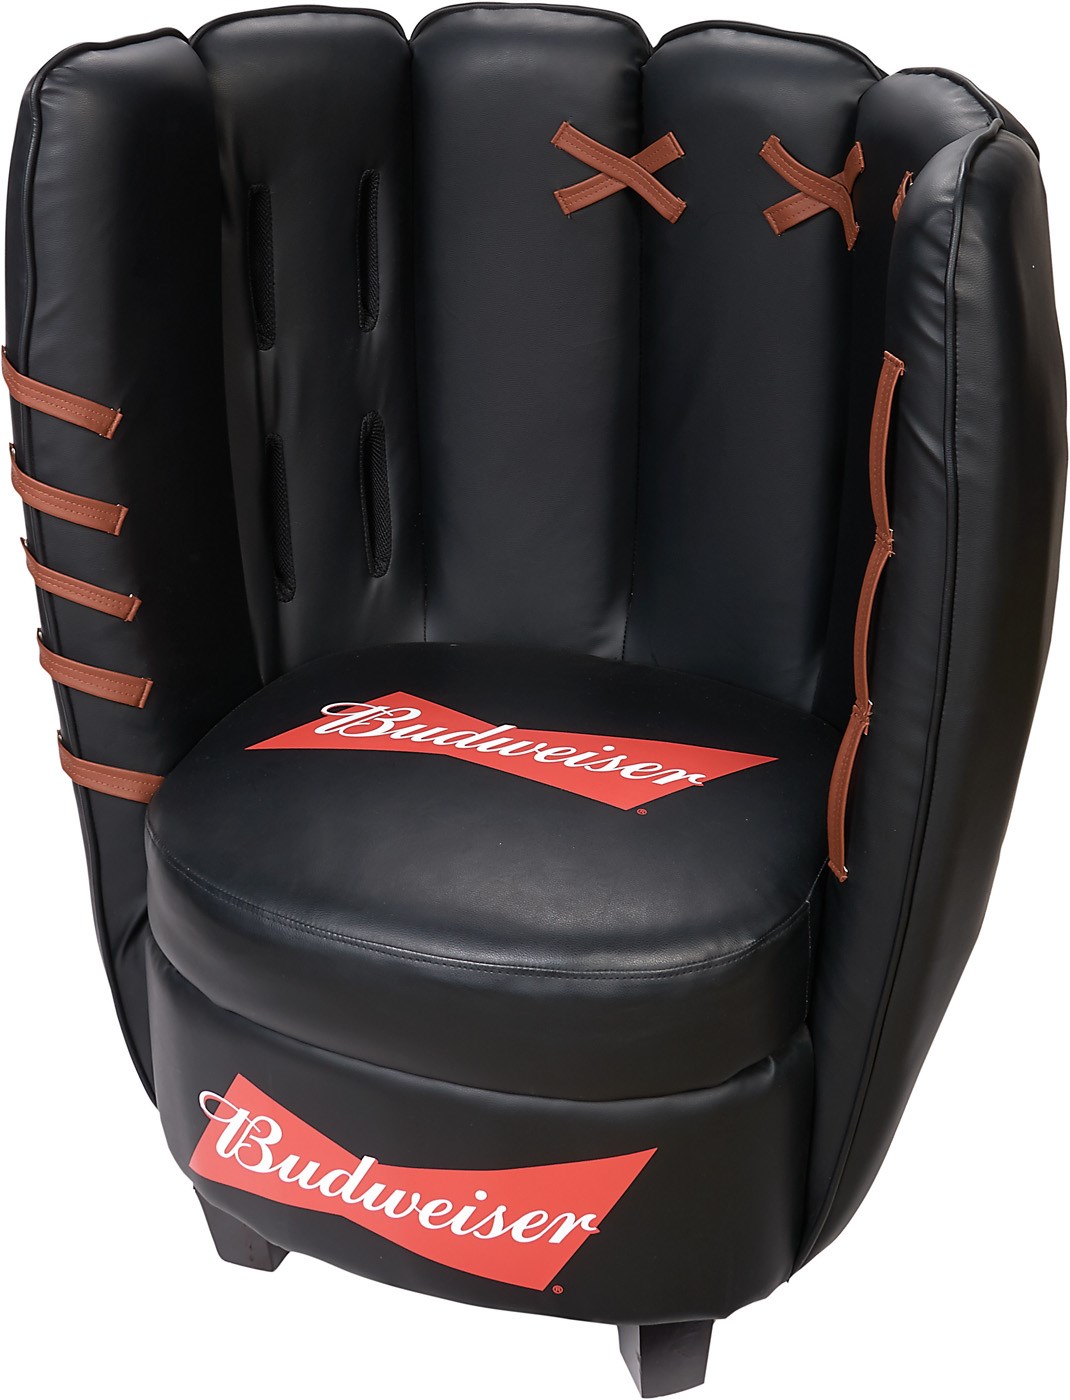 Budweiser Beer Giant Leather Baseball, Leather Baseball Glove Chair